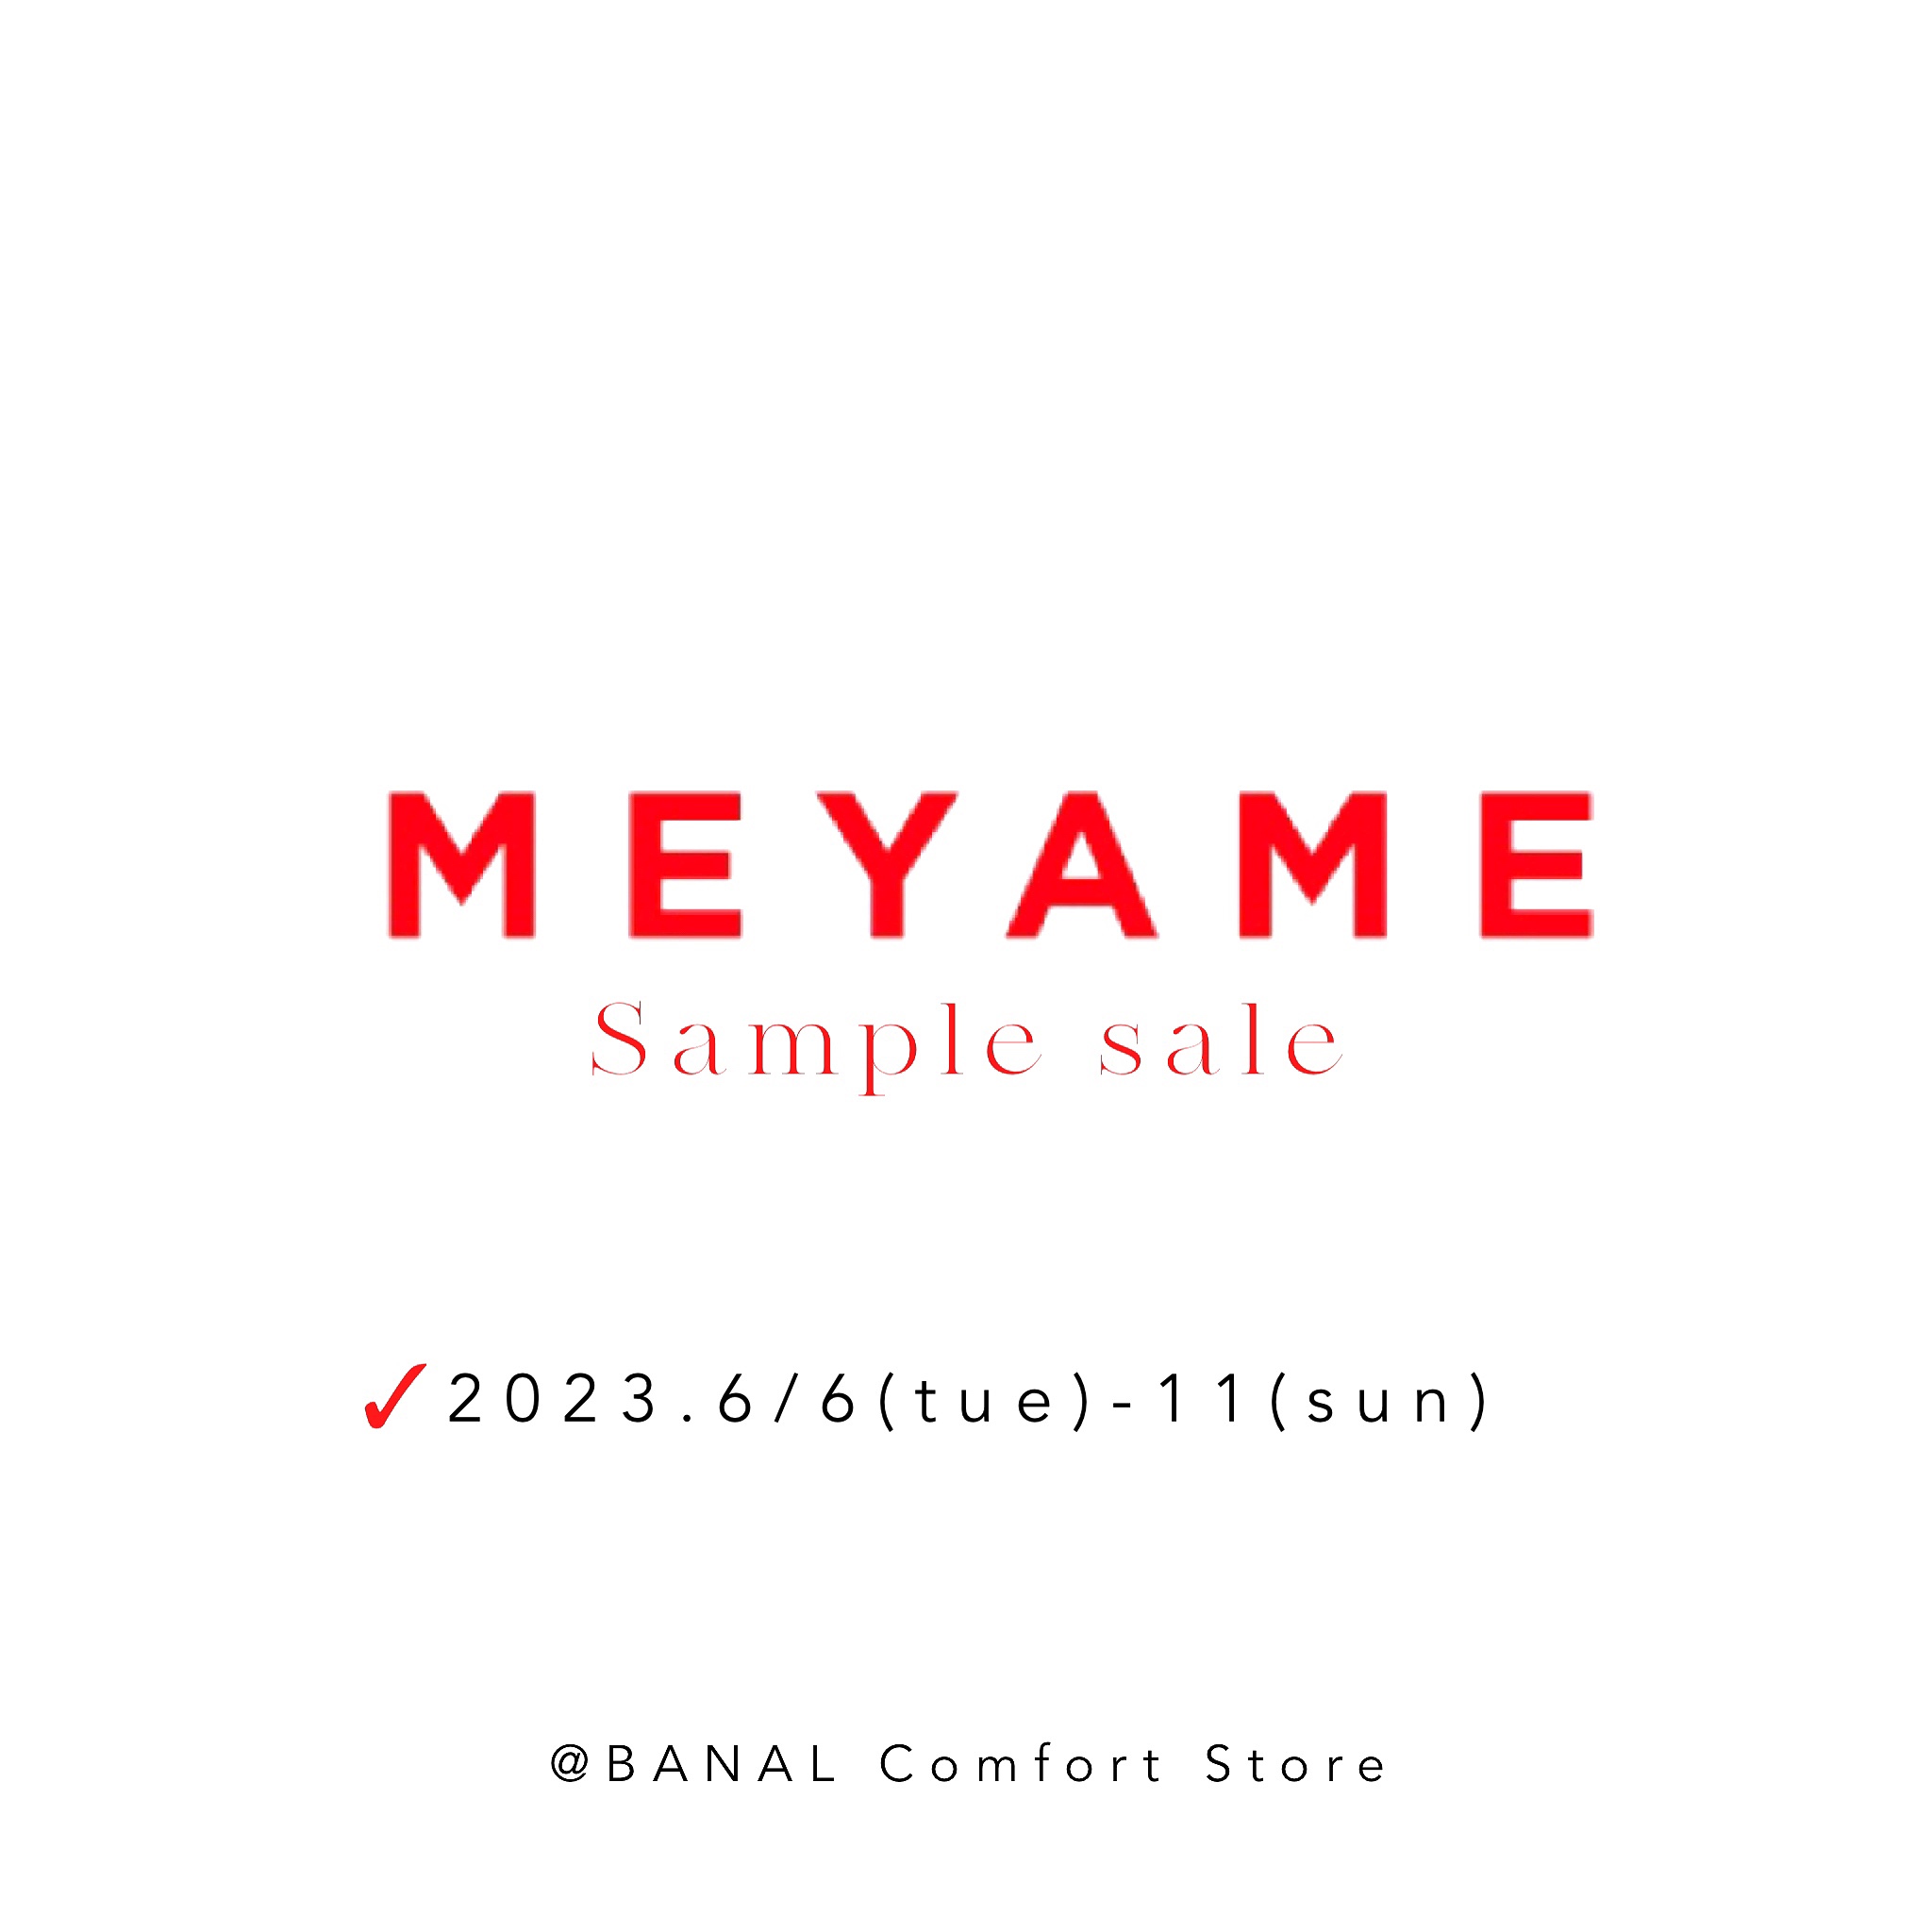 MEYAME Sample Sale